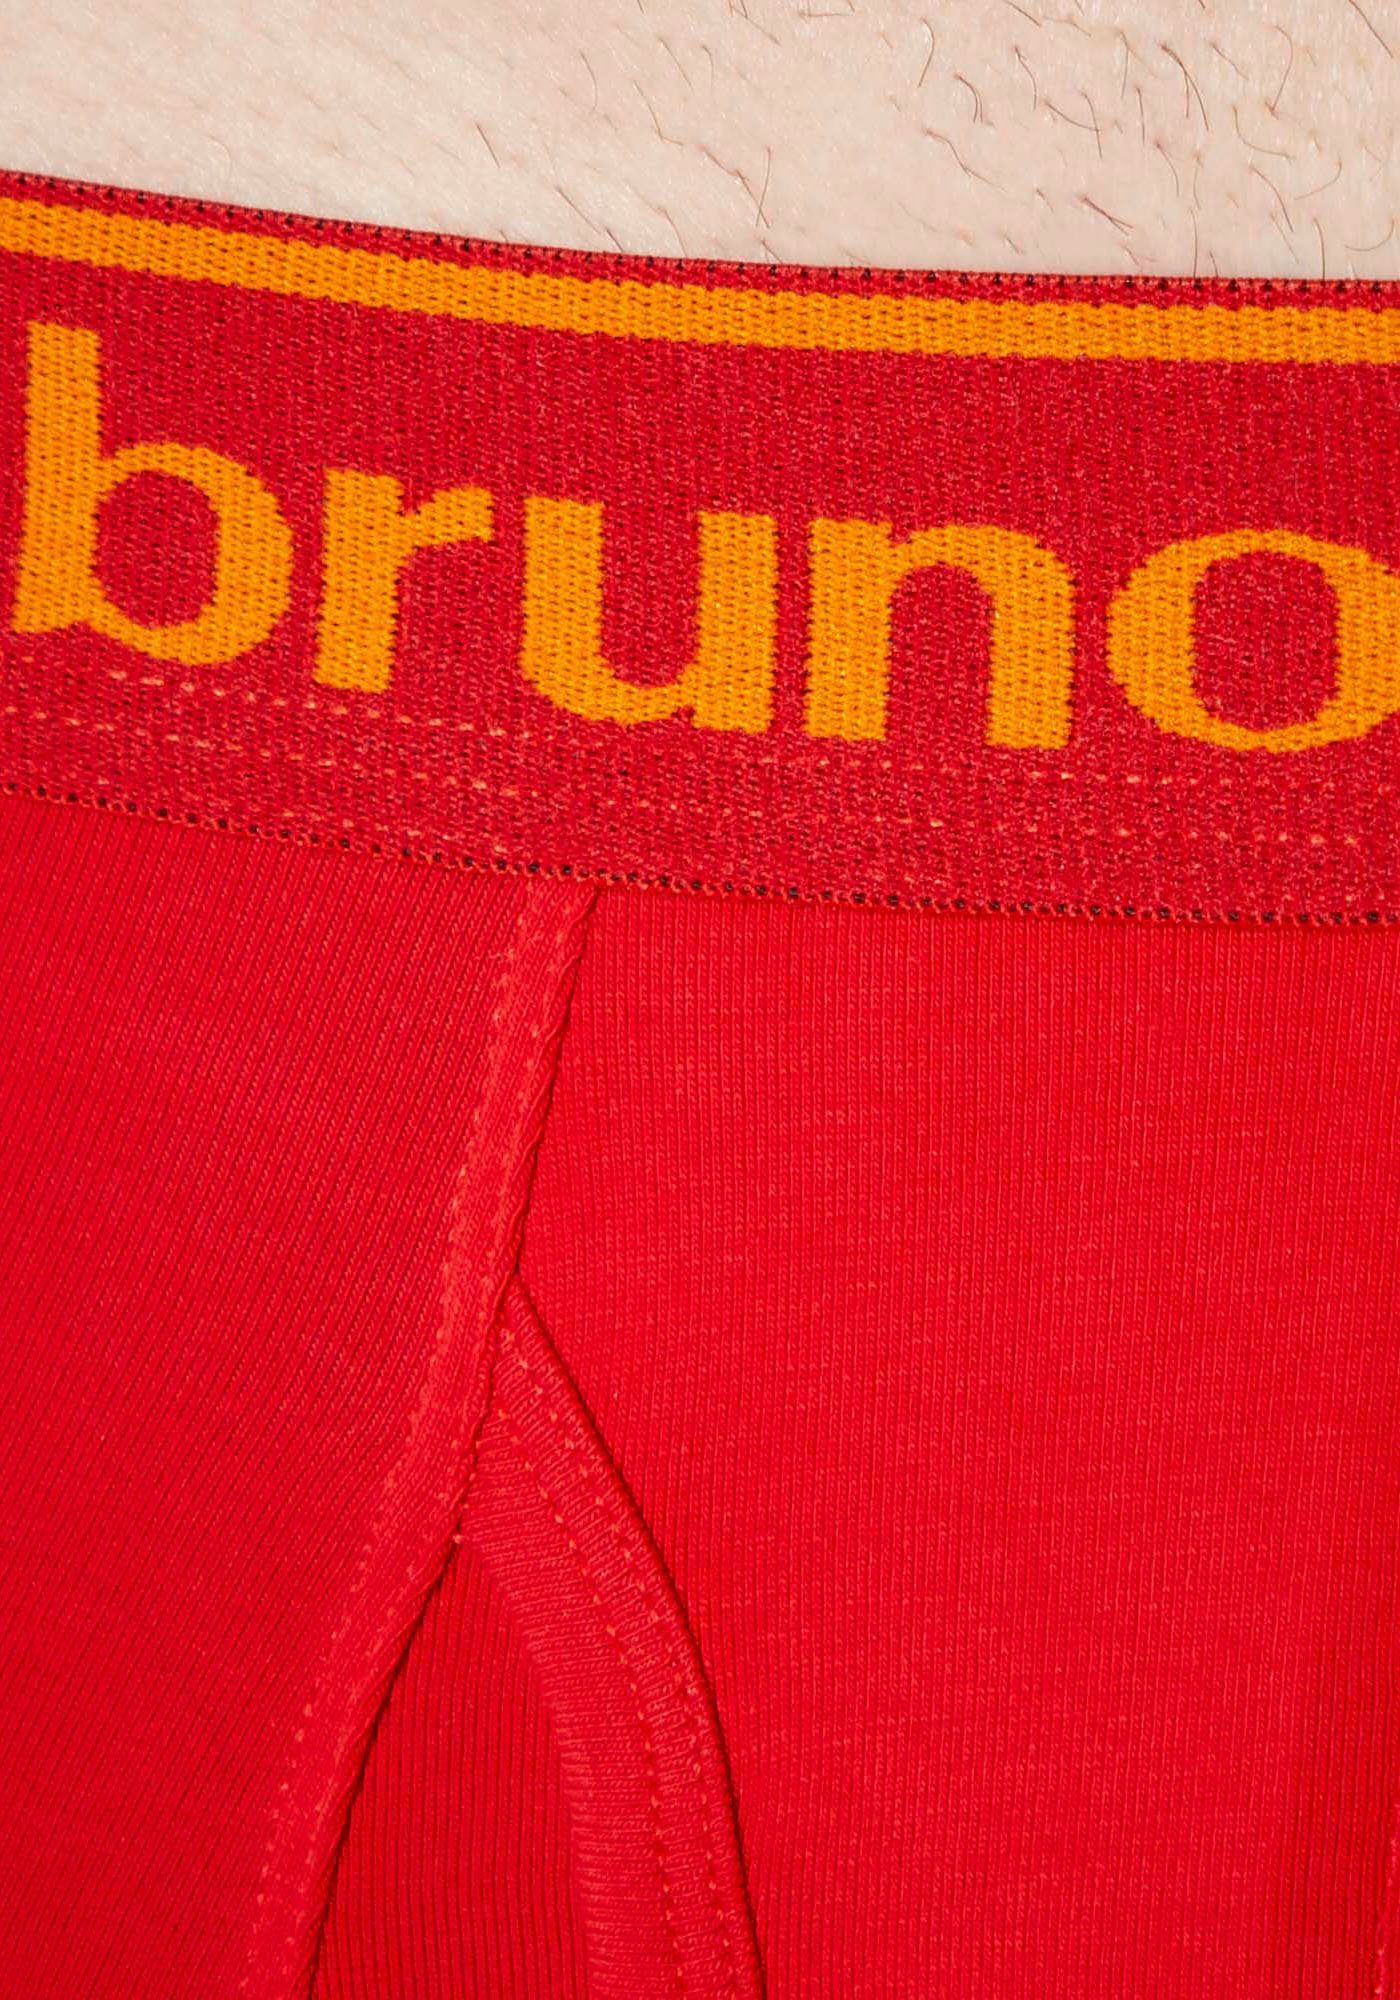 Bruno Banani Boxershorts Kontrastfarbene Details rot-schwarz Access Quick Short 2Pack (Packung, 2-St)